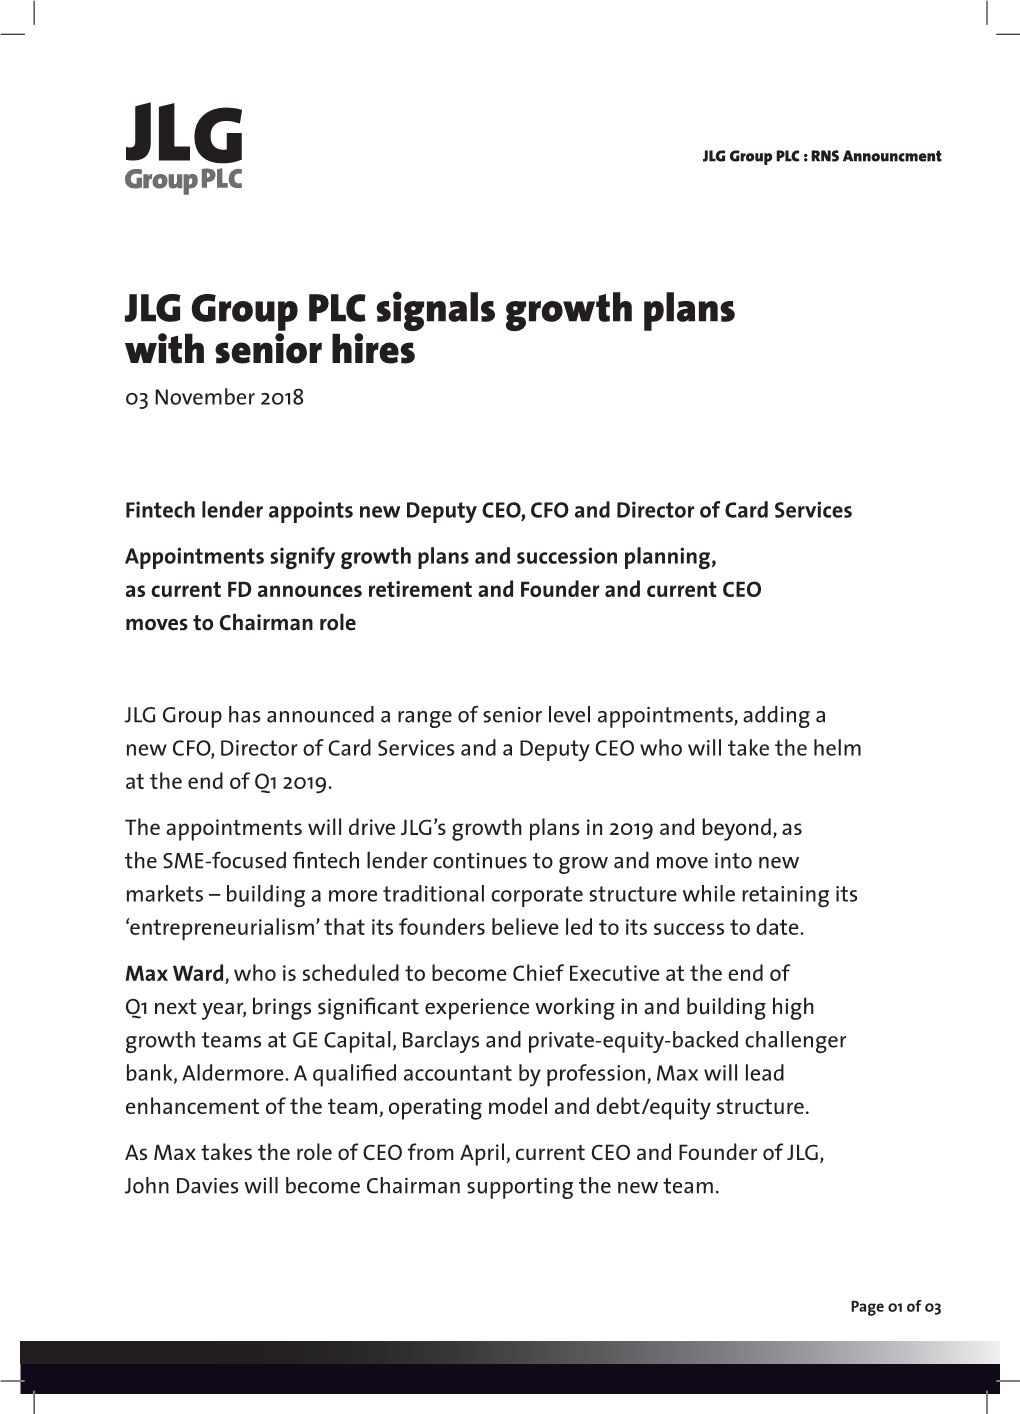 JLG Group PLC Signals Growth Plans with Senior Hires 03 November 2018